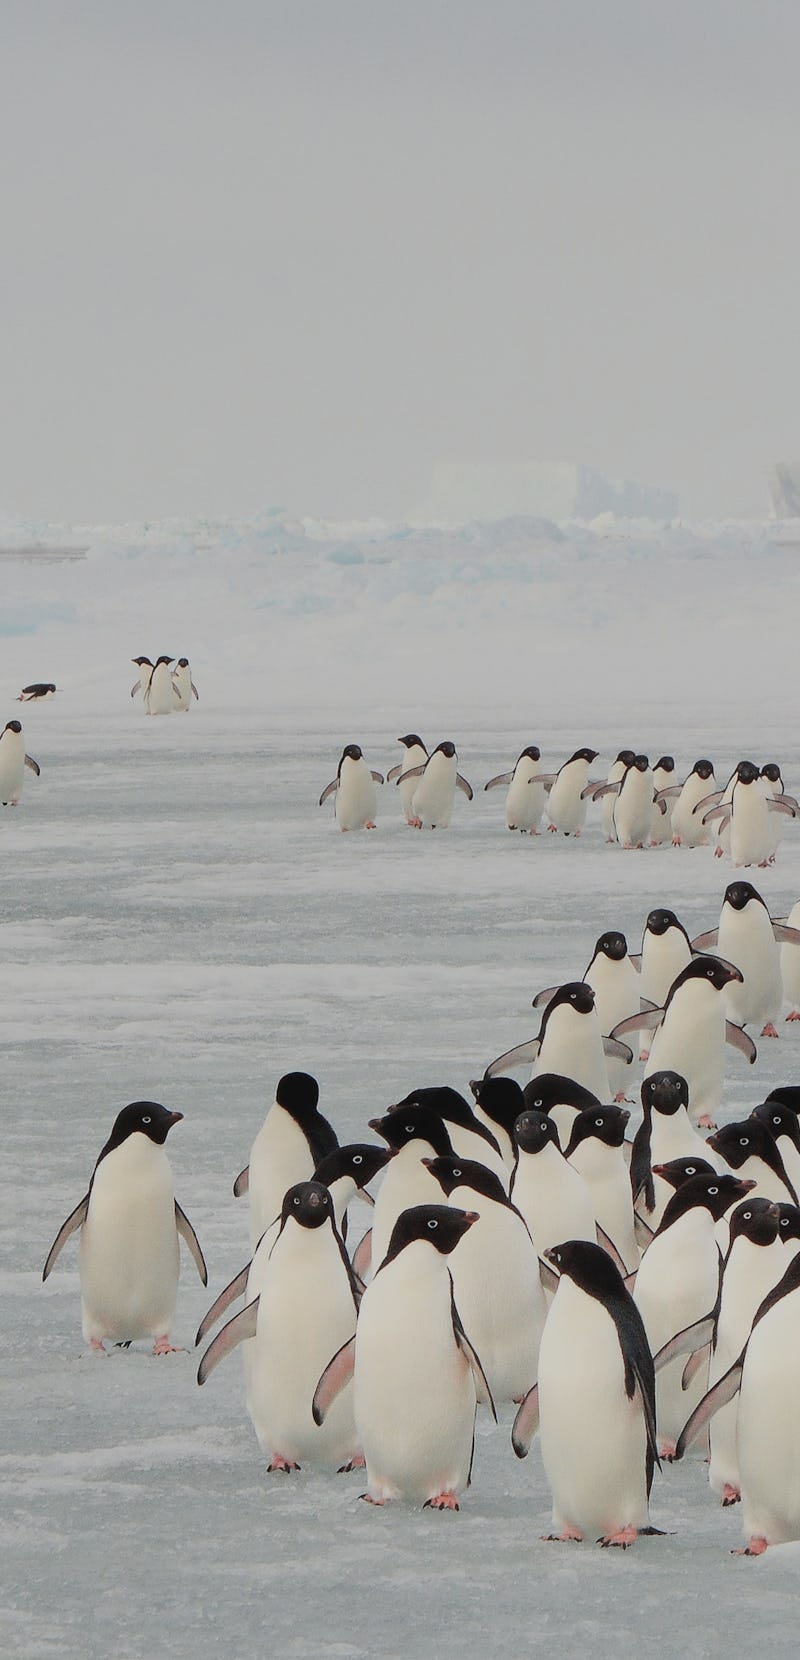 Annual migration of Adélie penguin in South Orkney Islands